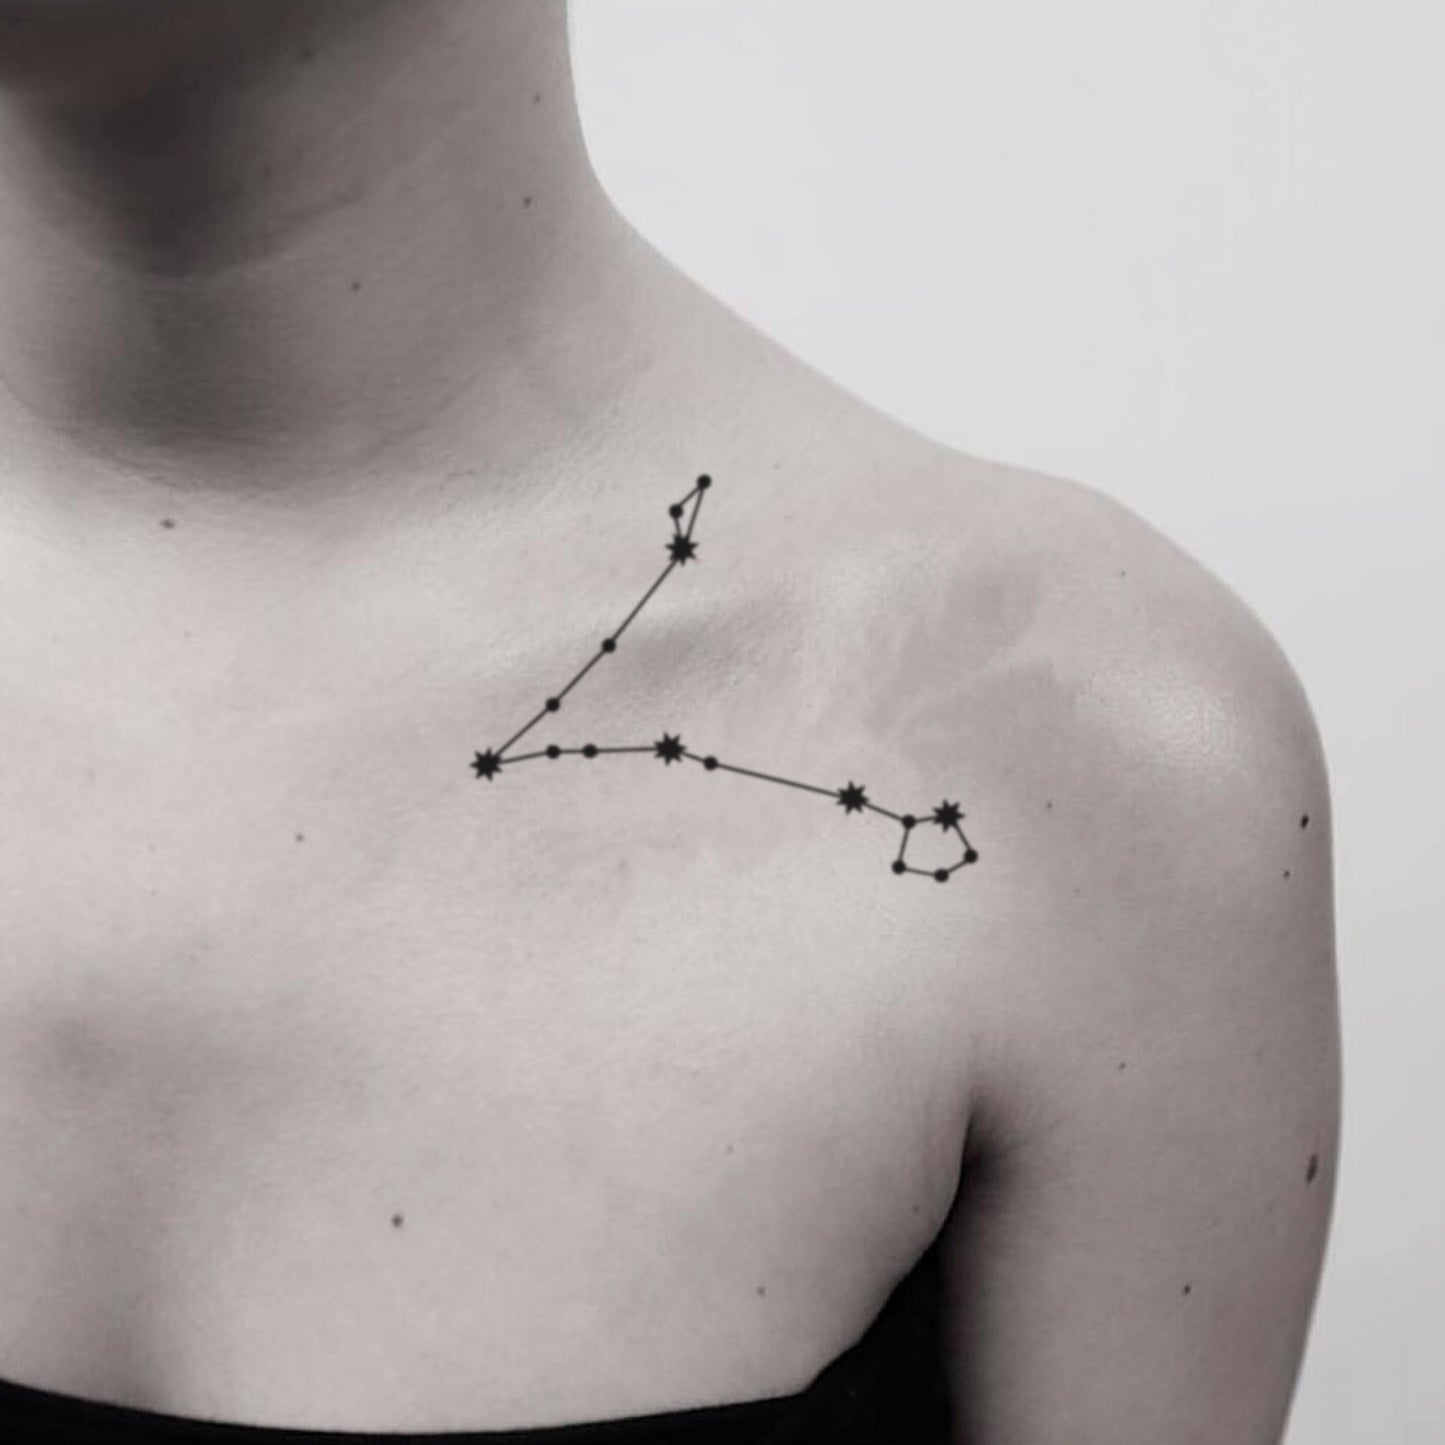 fake small pisces constellation horoscope zodiac sign pleiades star cluster minimalist temporary tattoo sticker design idea on shoulder